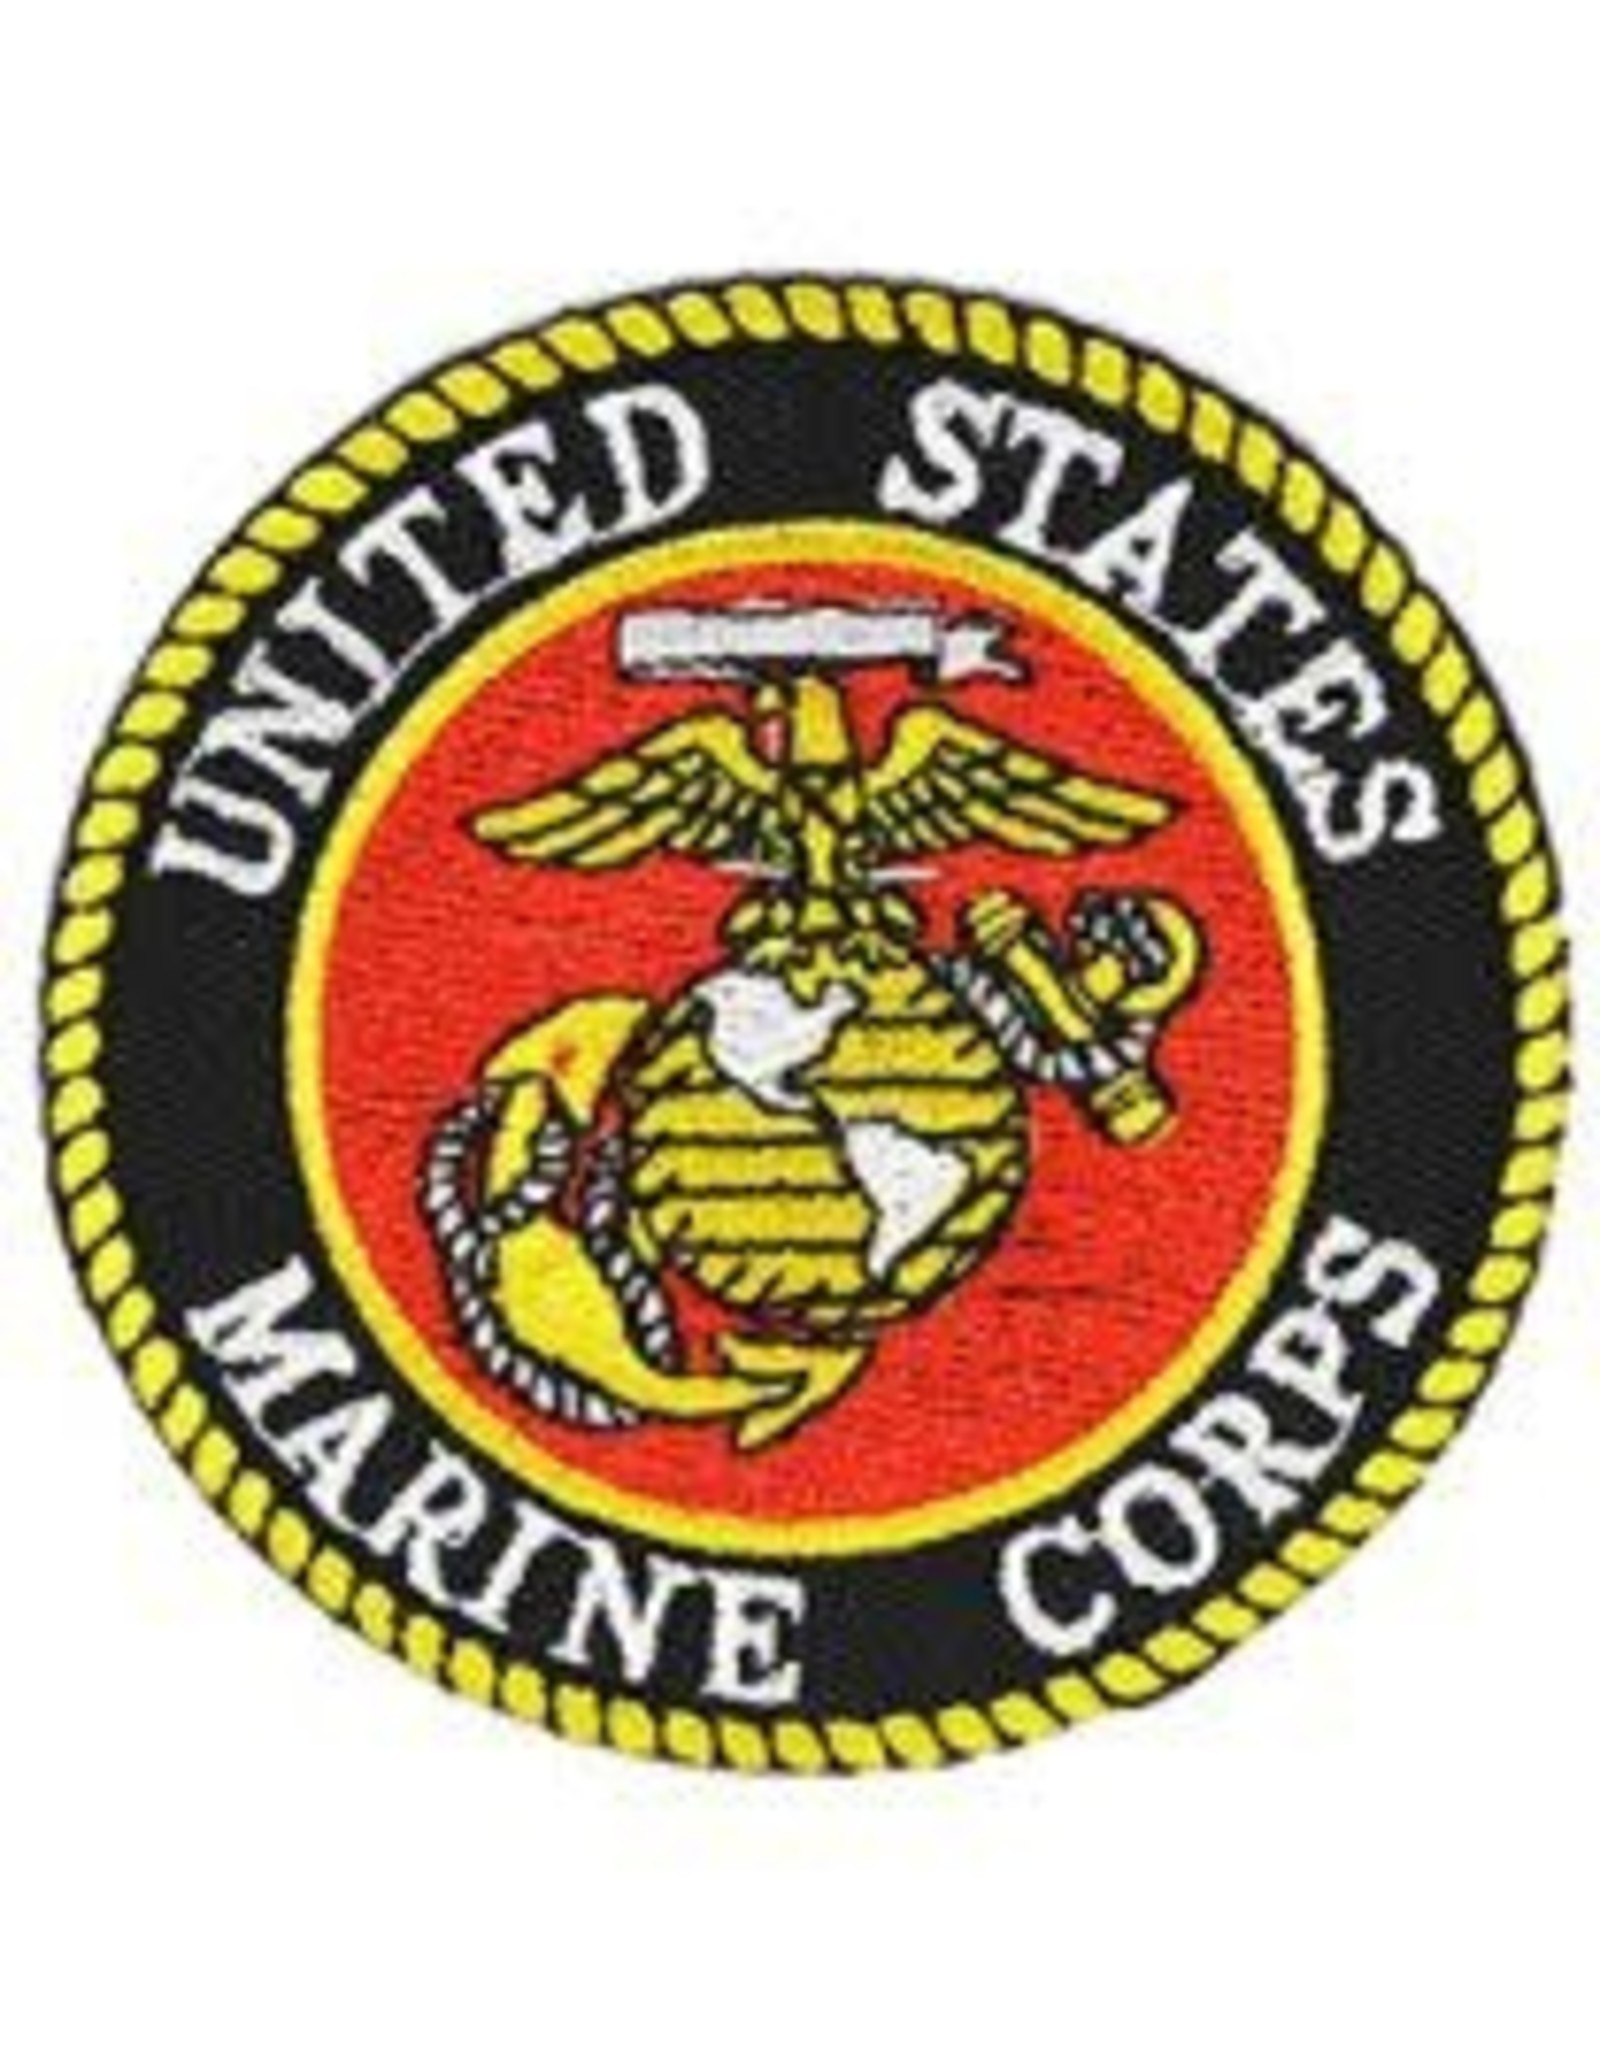 Patch - USMC Logo